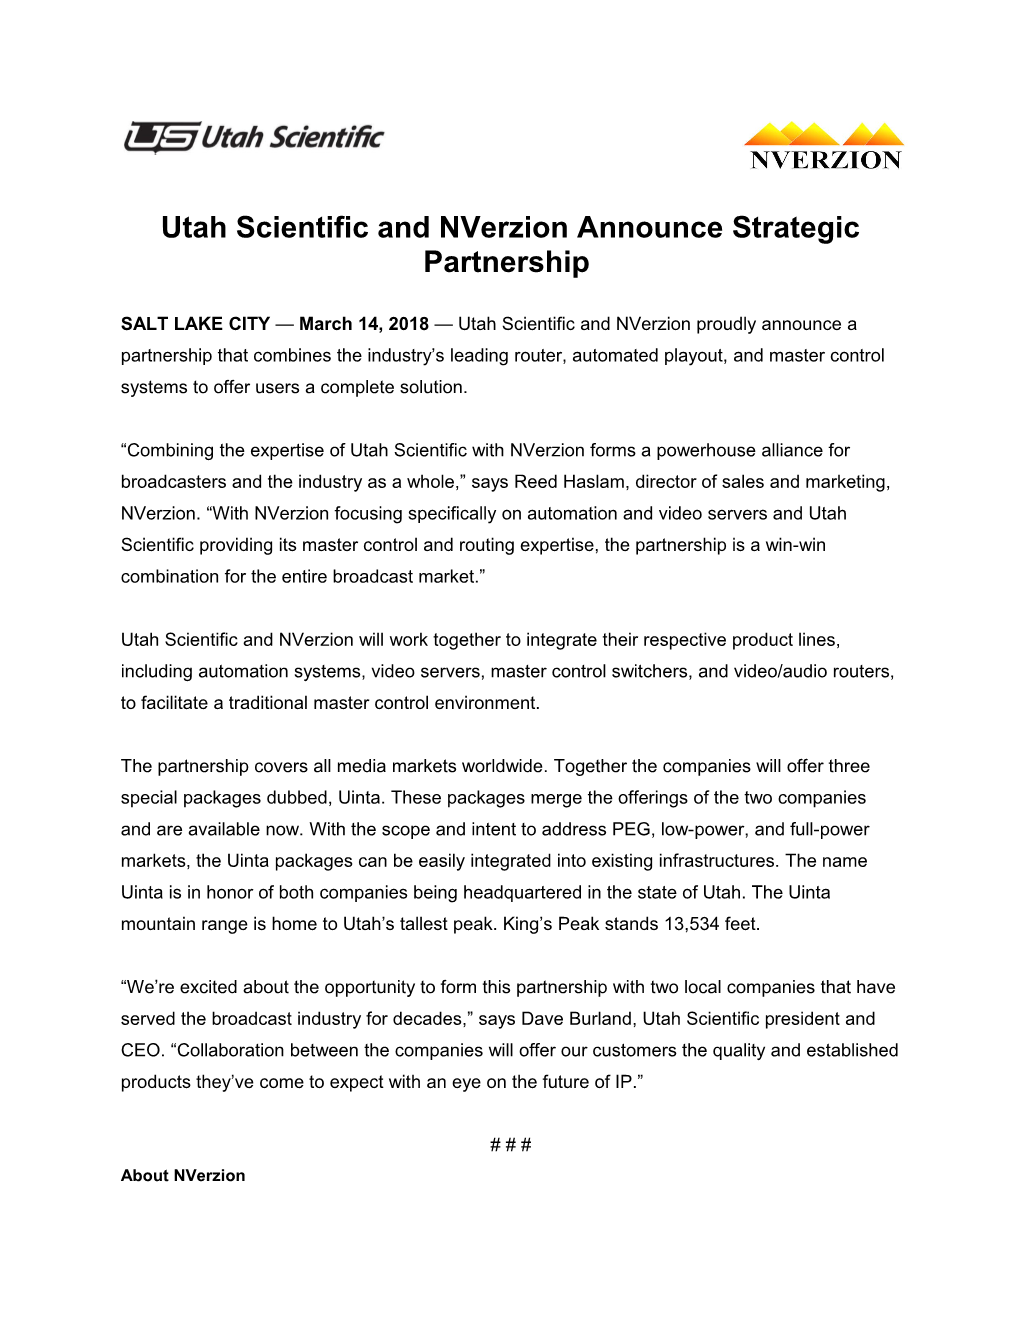 Utah Scientific and Nverzion Announce Strategic Partnership